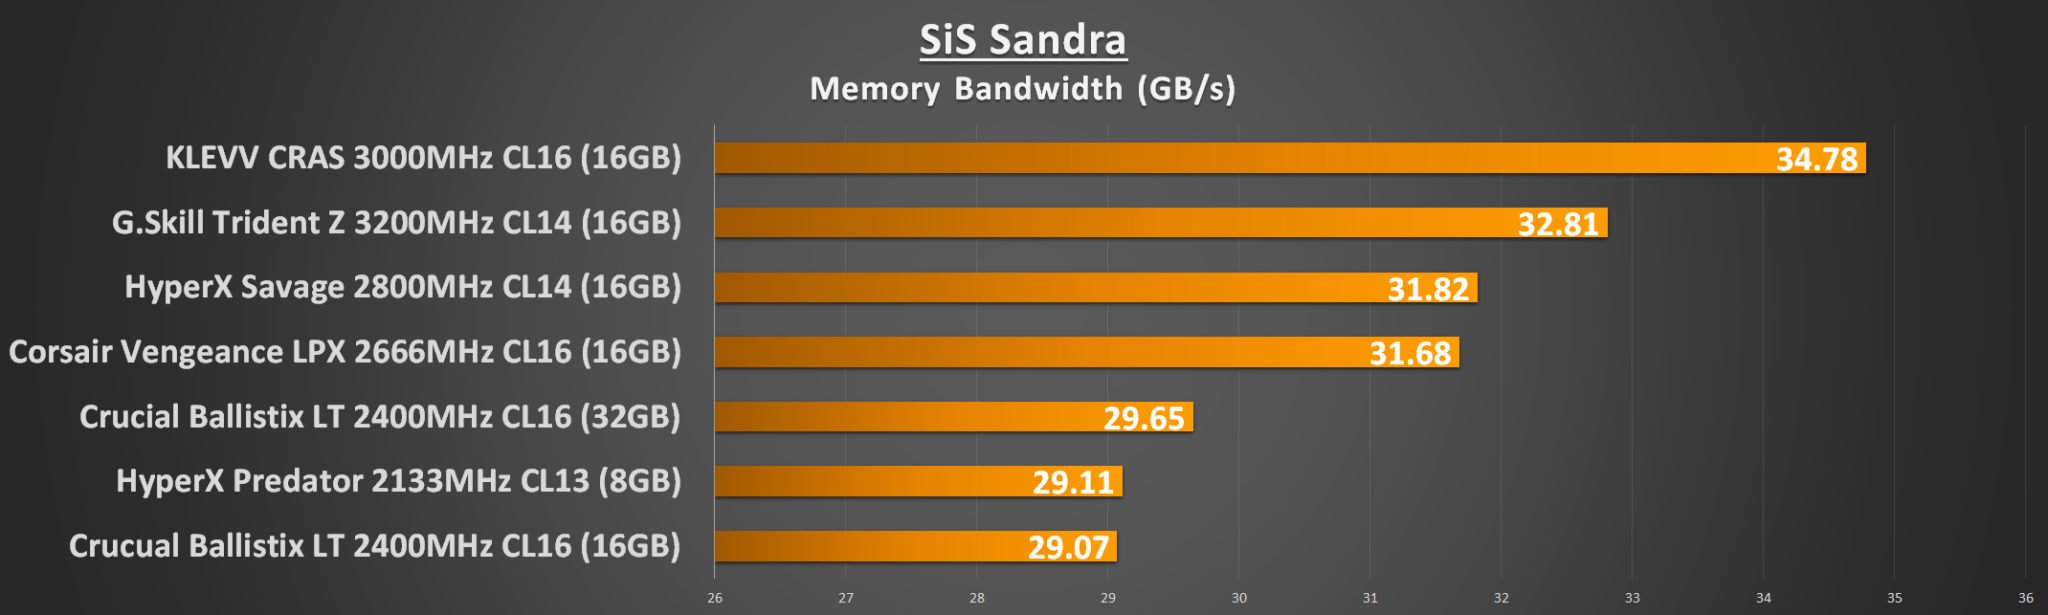 SiS Sandra Memory Bandwidth